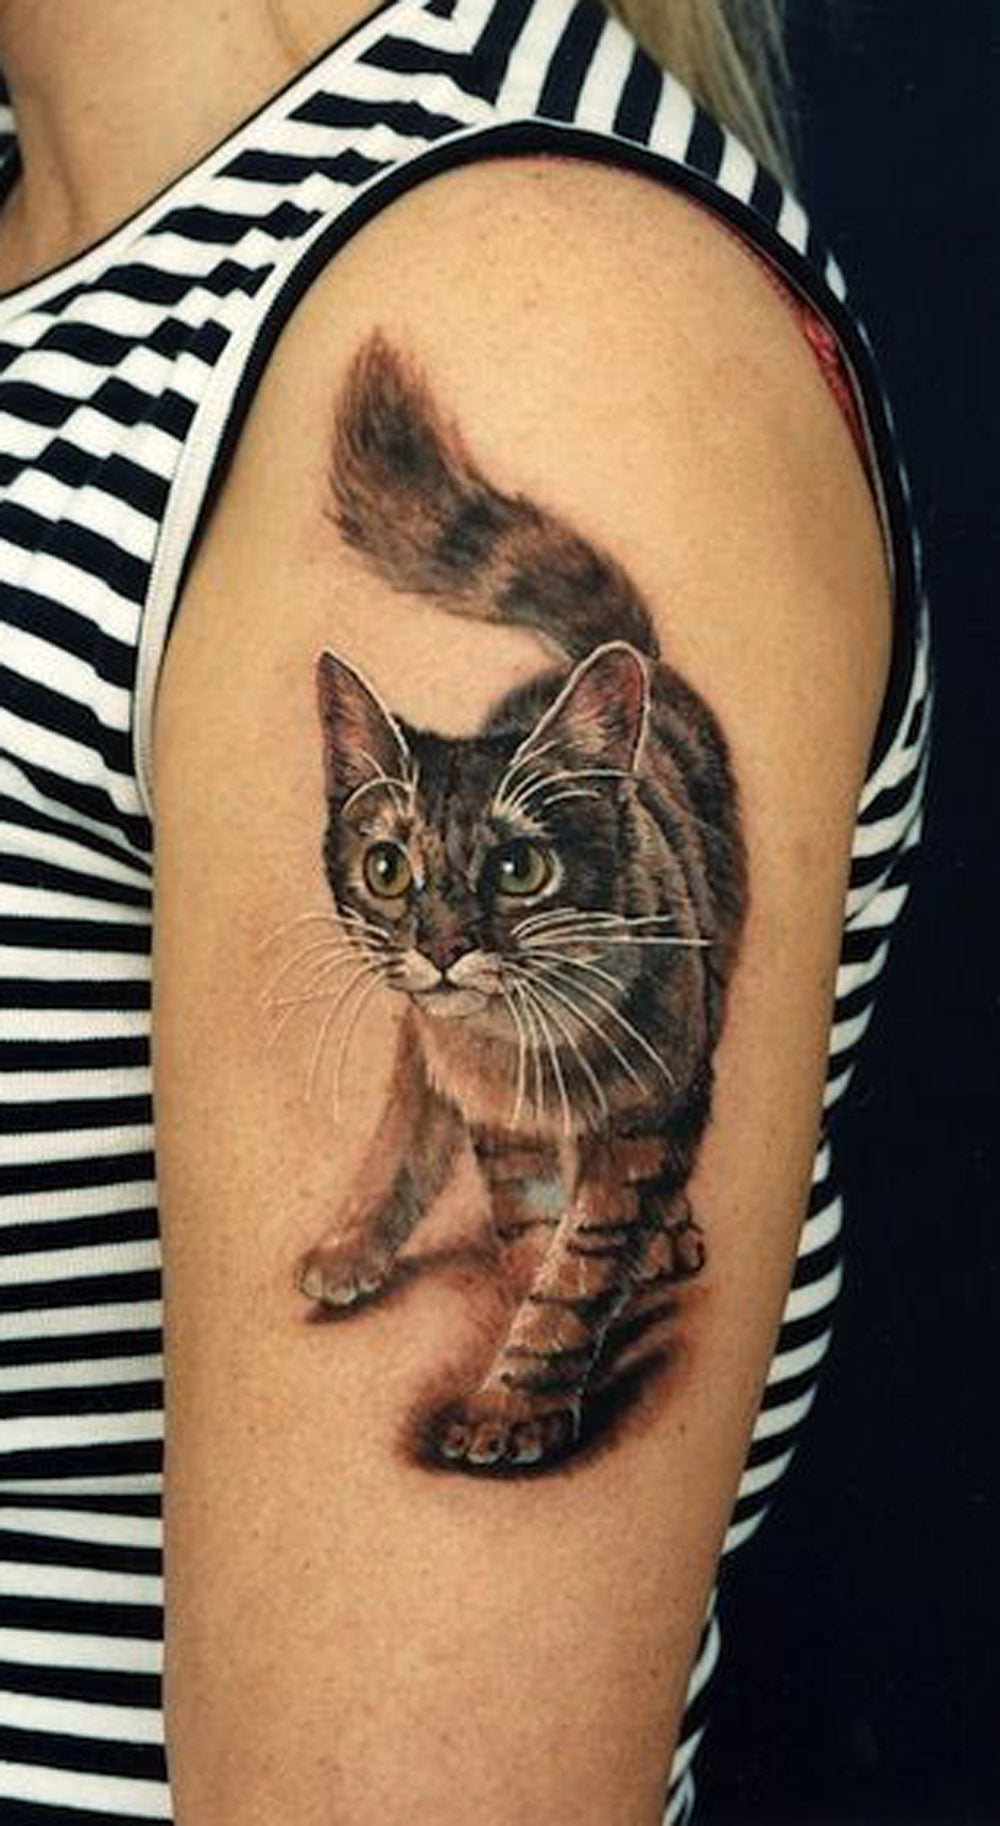 Realistic Arm Sleeve Cat Tattoo Ideas for Women -   Ideas manga del brazo del gato del tatuaje para las mujeres - www.MyBodiArt.com